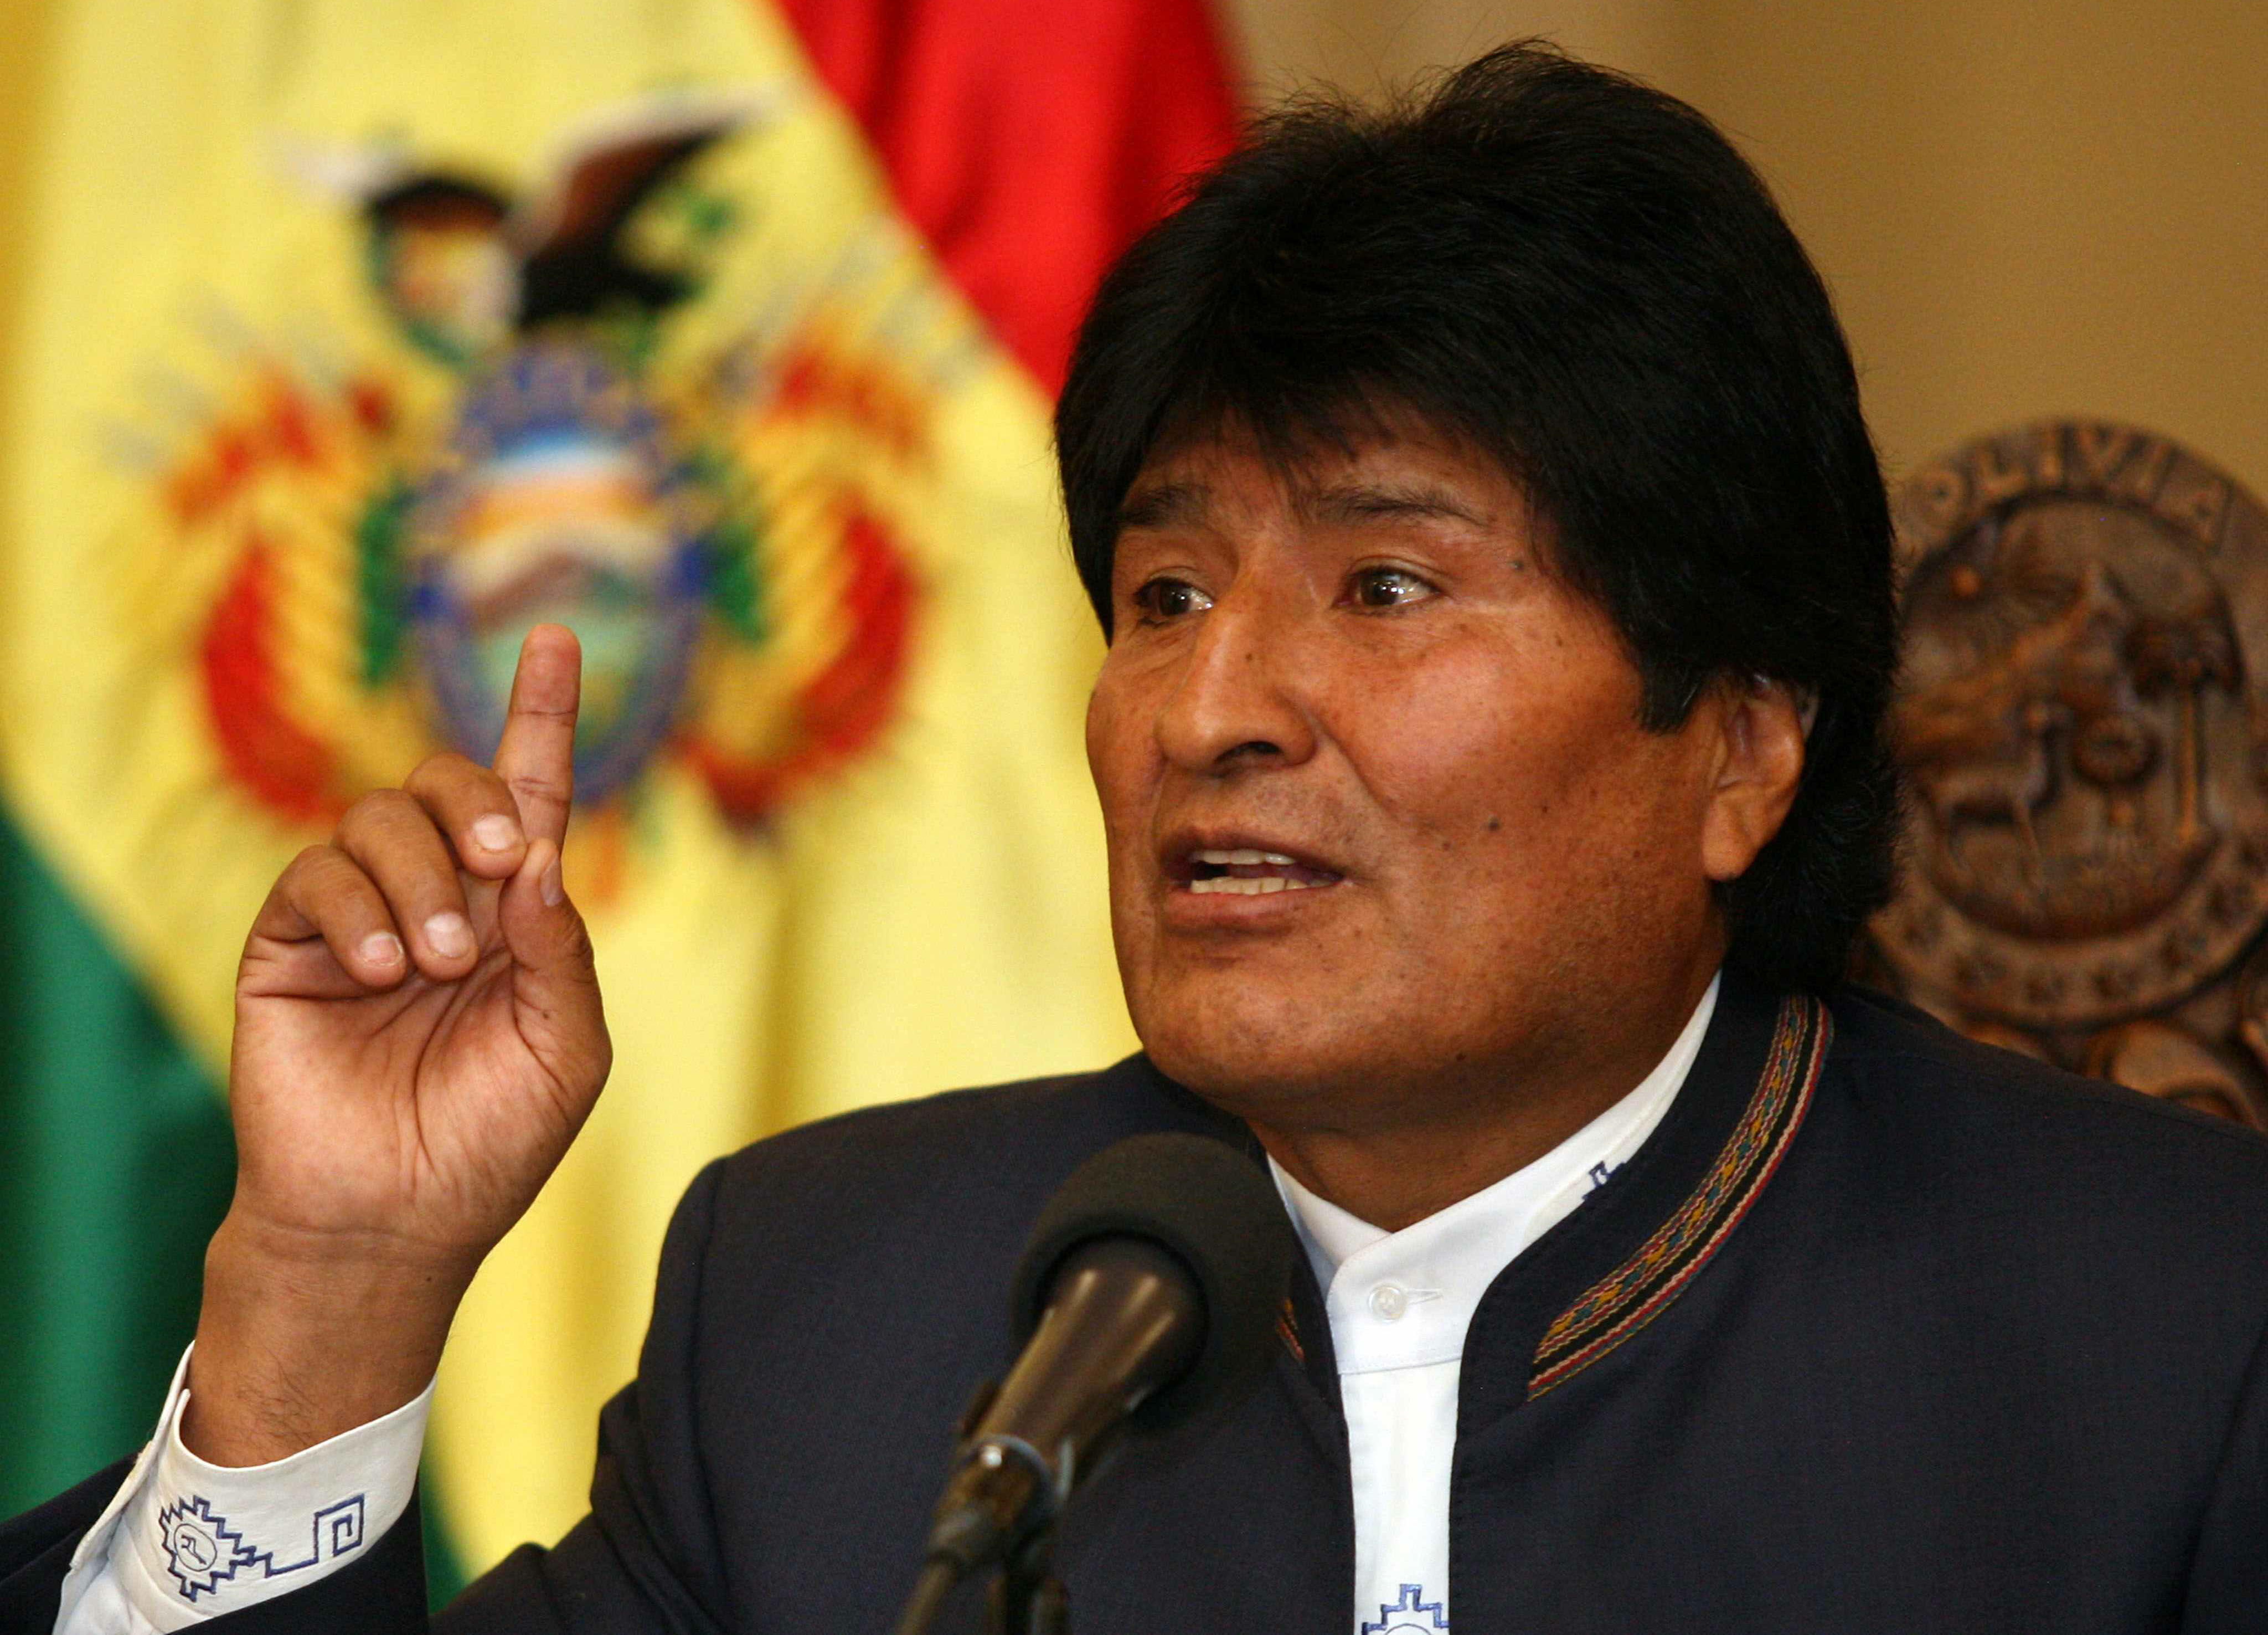 La CIA "persiguió, torturó y asesinó" al Che en Bolivia, dice Evo Morales